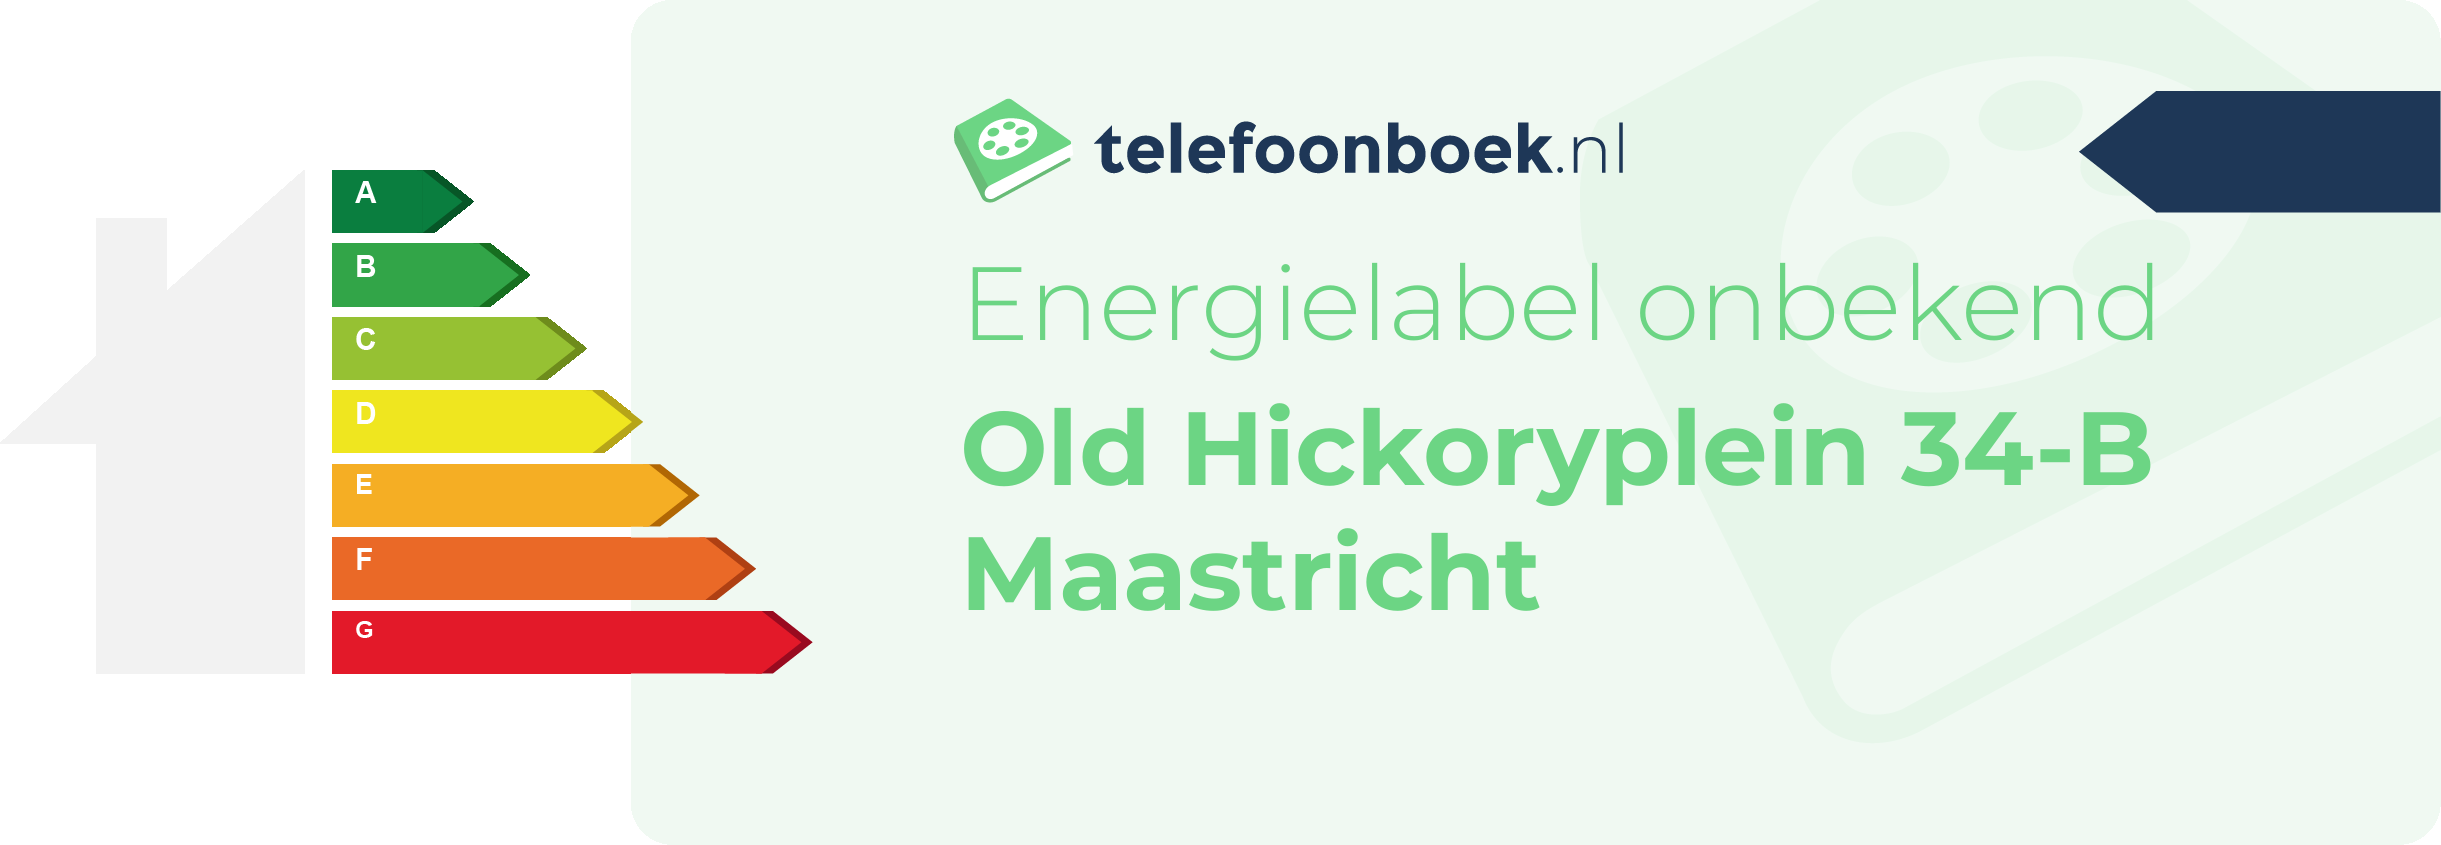 Energielabel Old Hickoryplein 34-B Maastricht